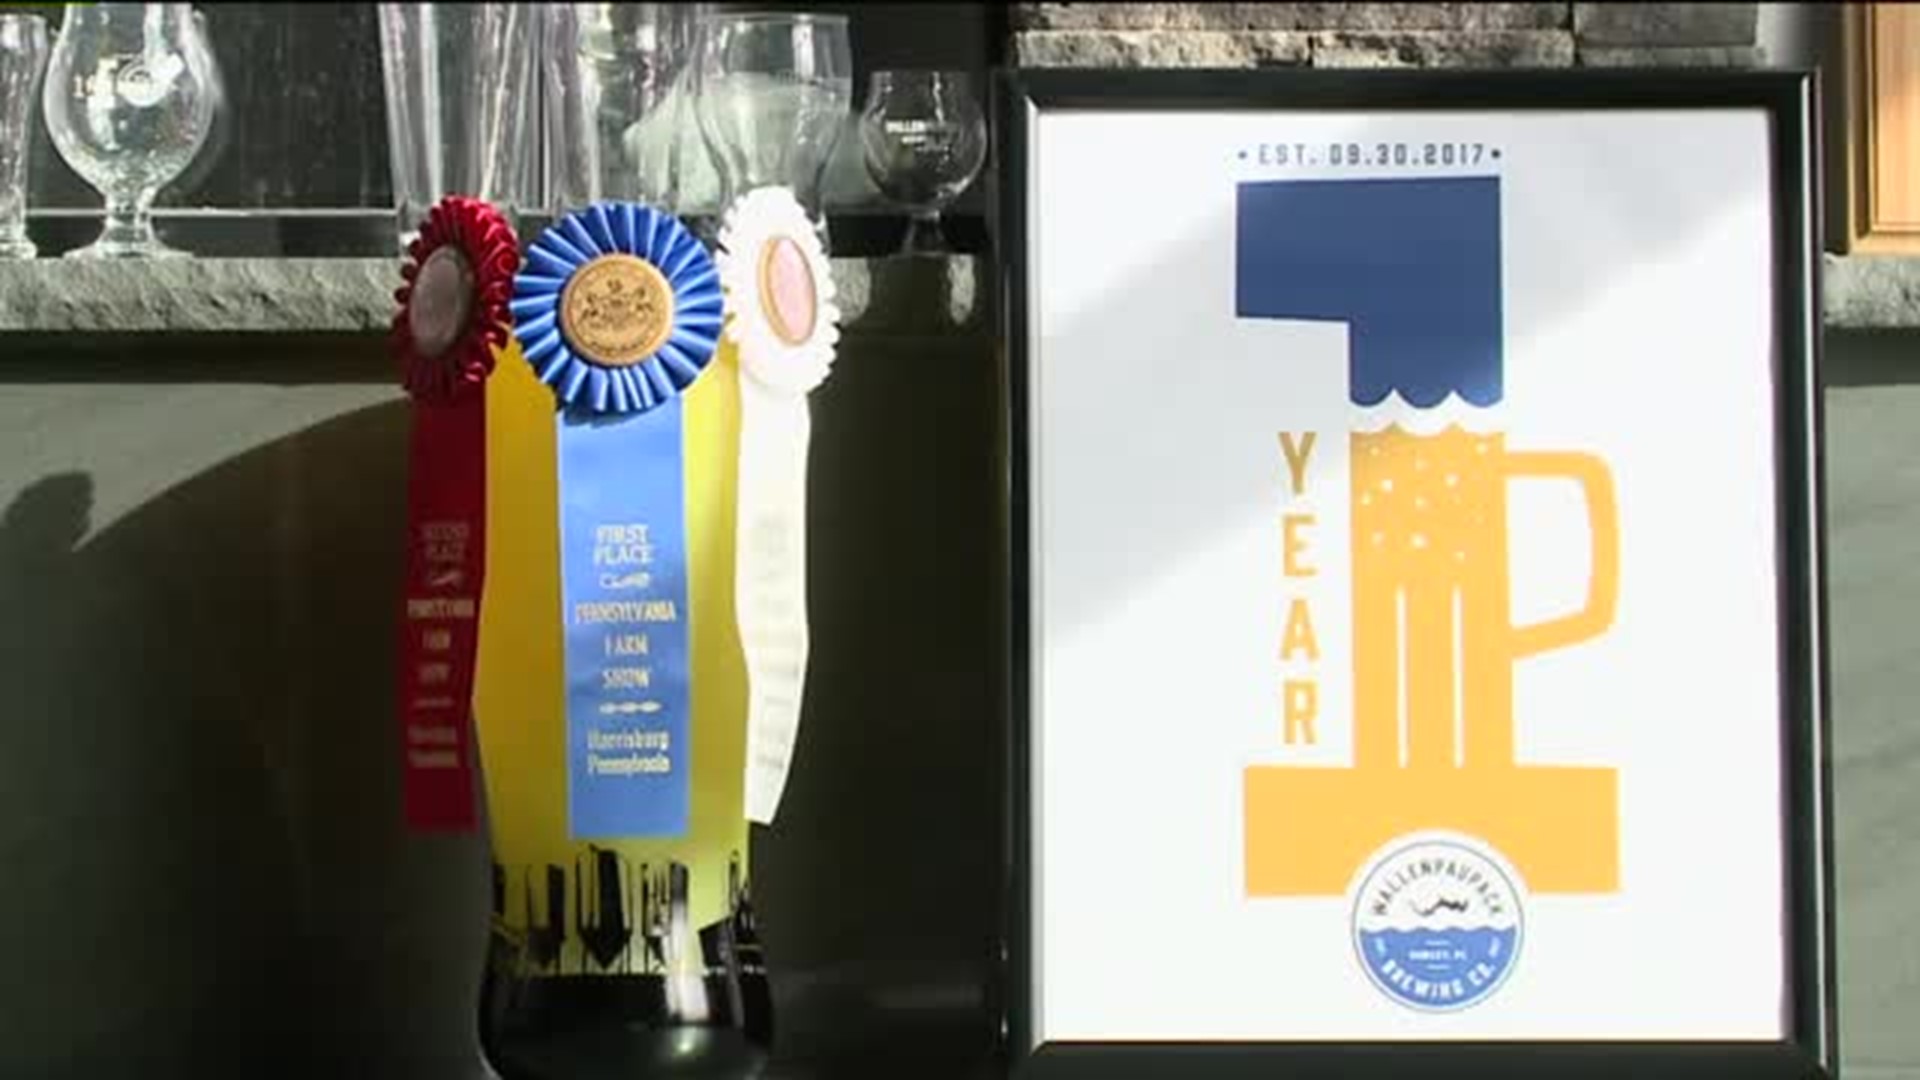 Wayne County Brewery Wins Big at Pennsylvania Farm Show